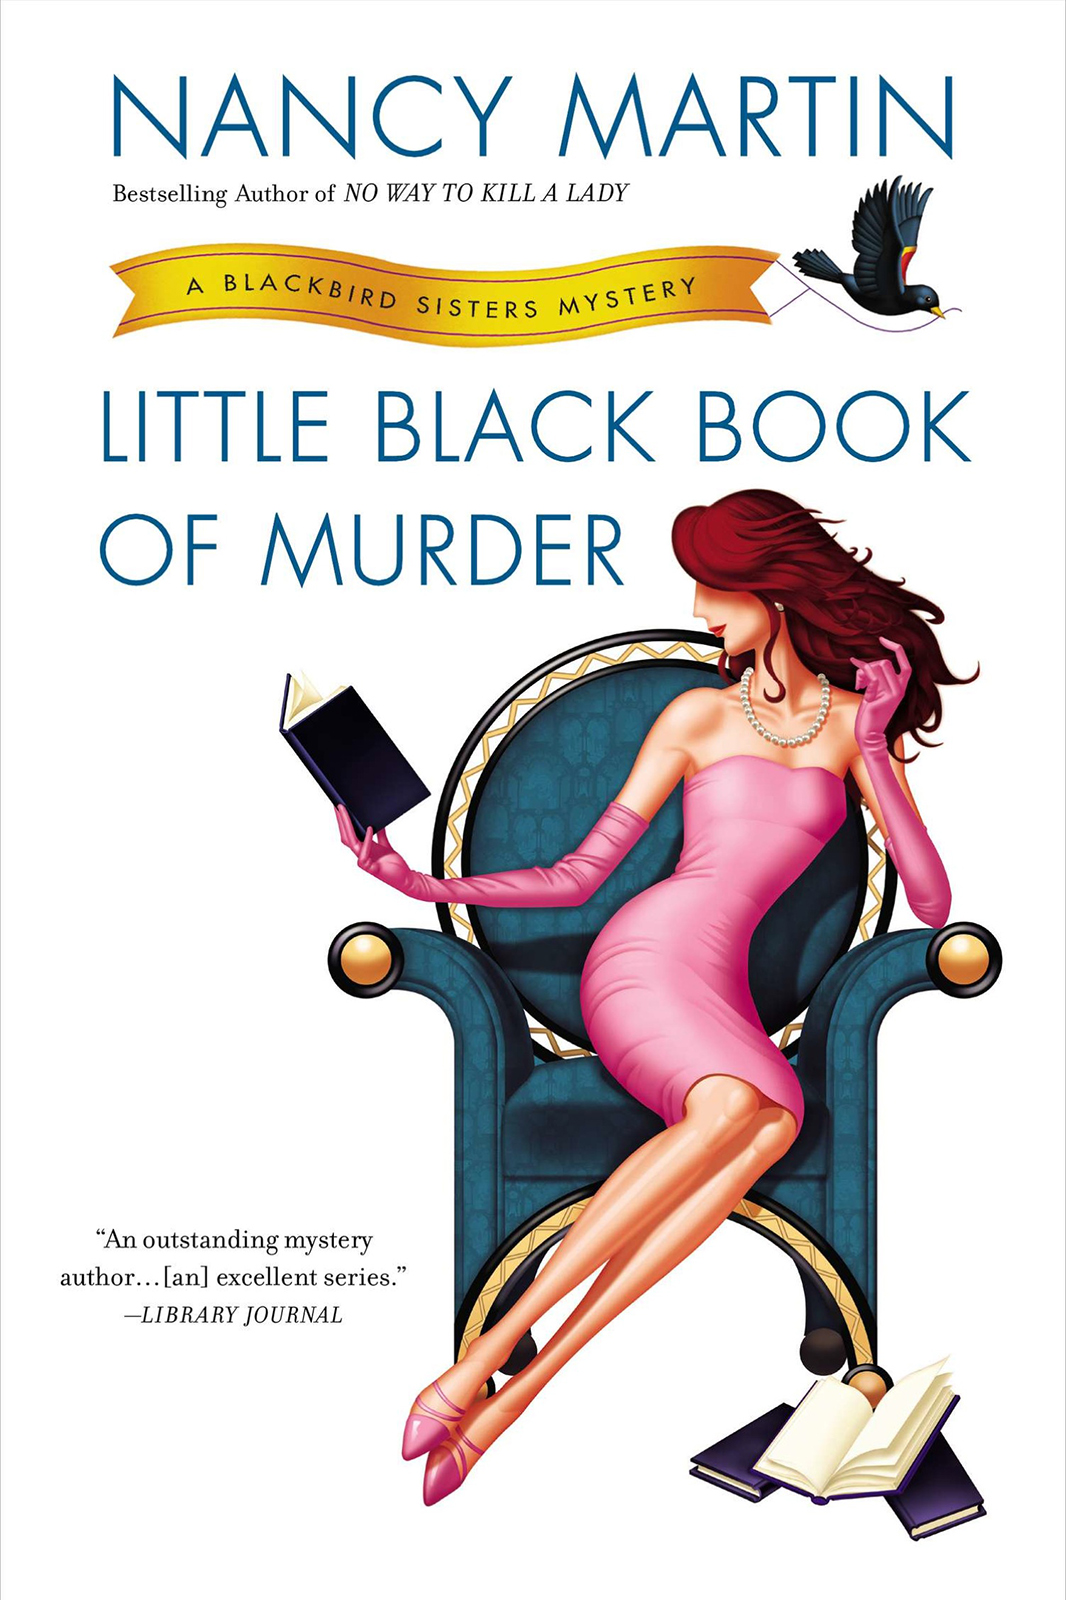 Little Black Book of Murder (2014) by Nancy Martin